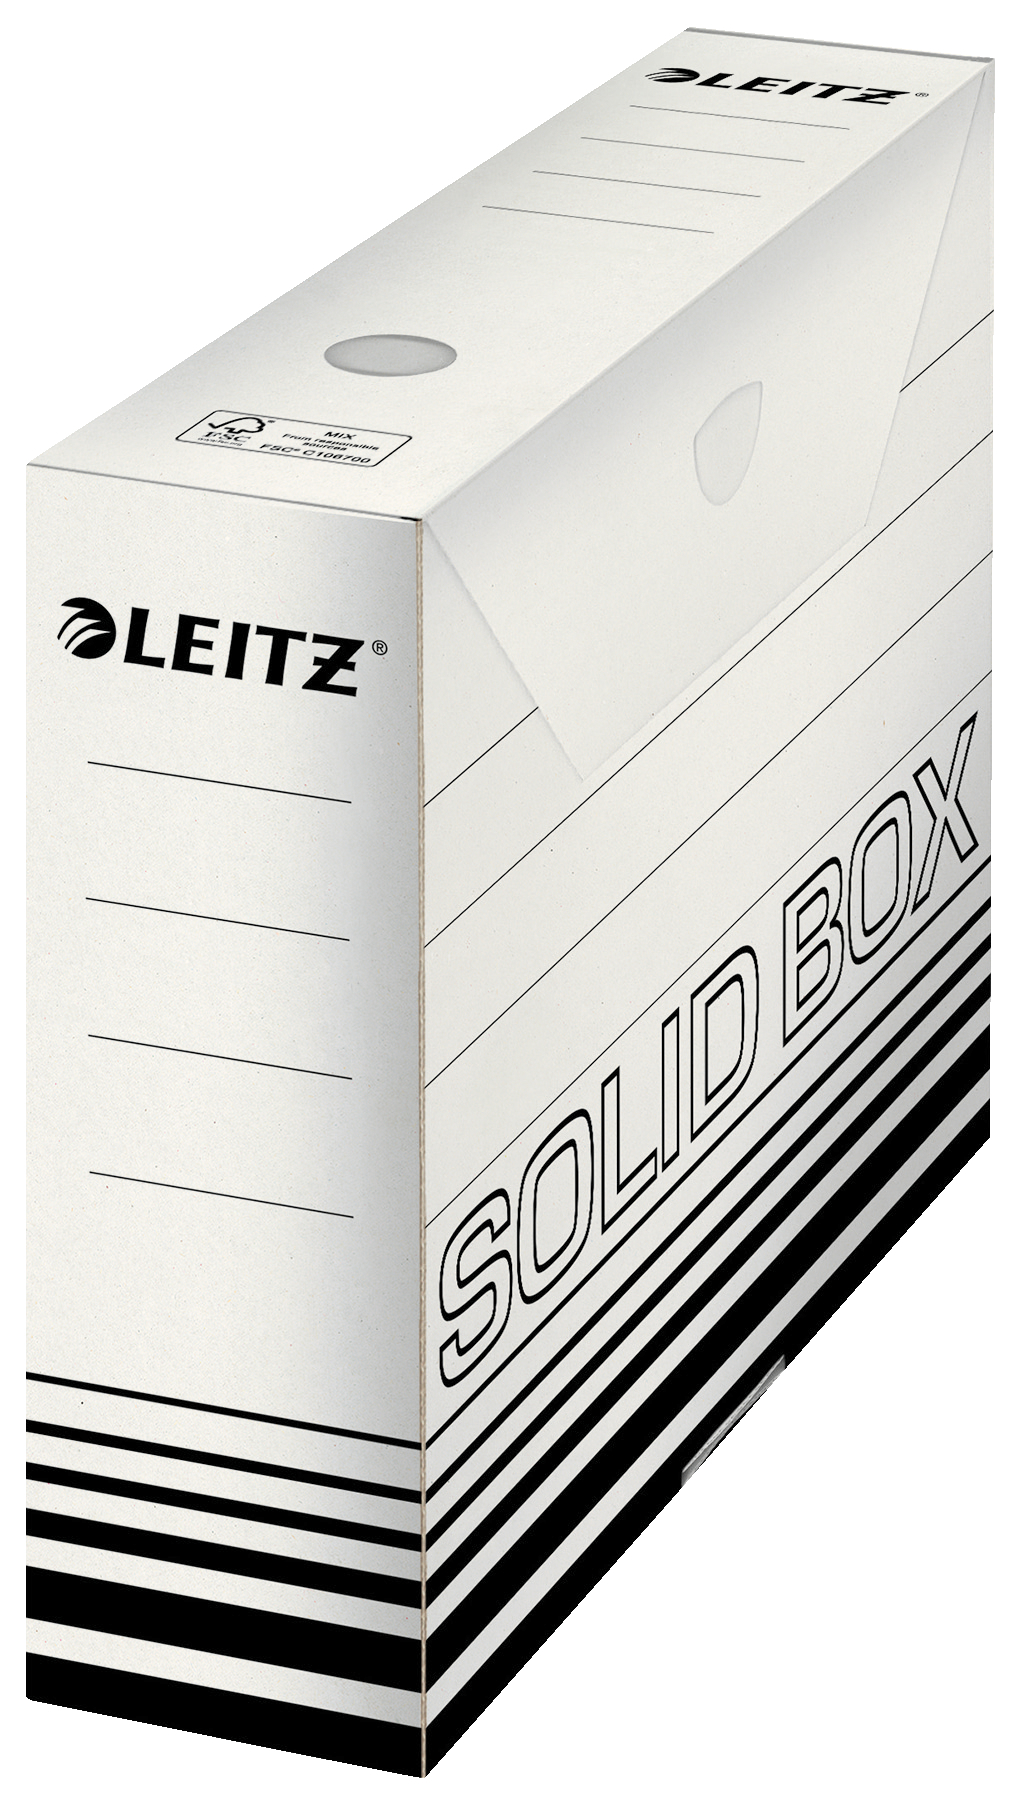 LEITZ Solid Box A4 6127-00-01 blanc 80x257x330mm